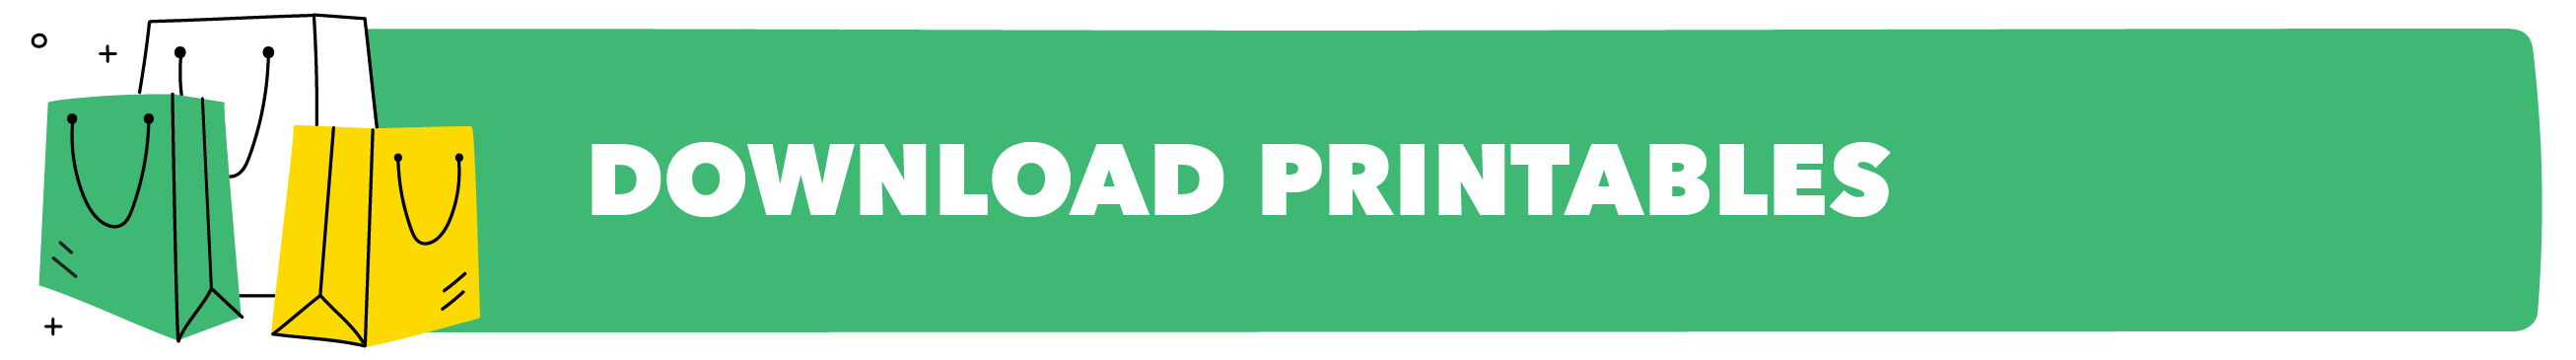 Download Printables